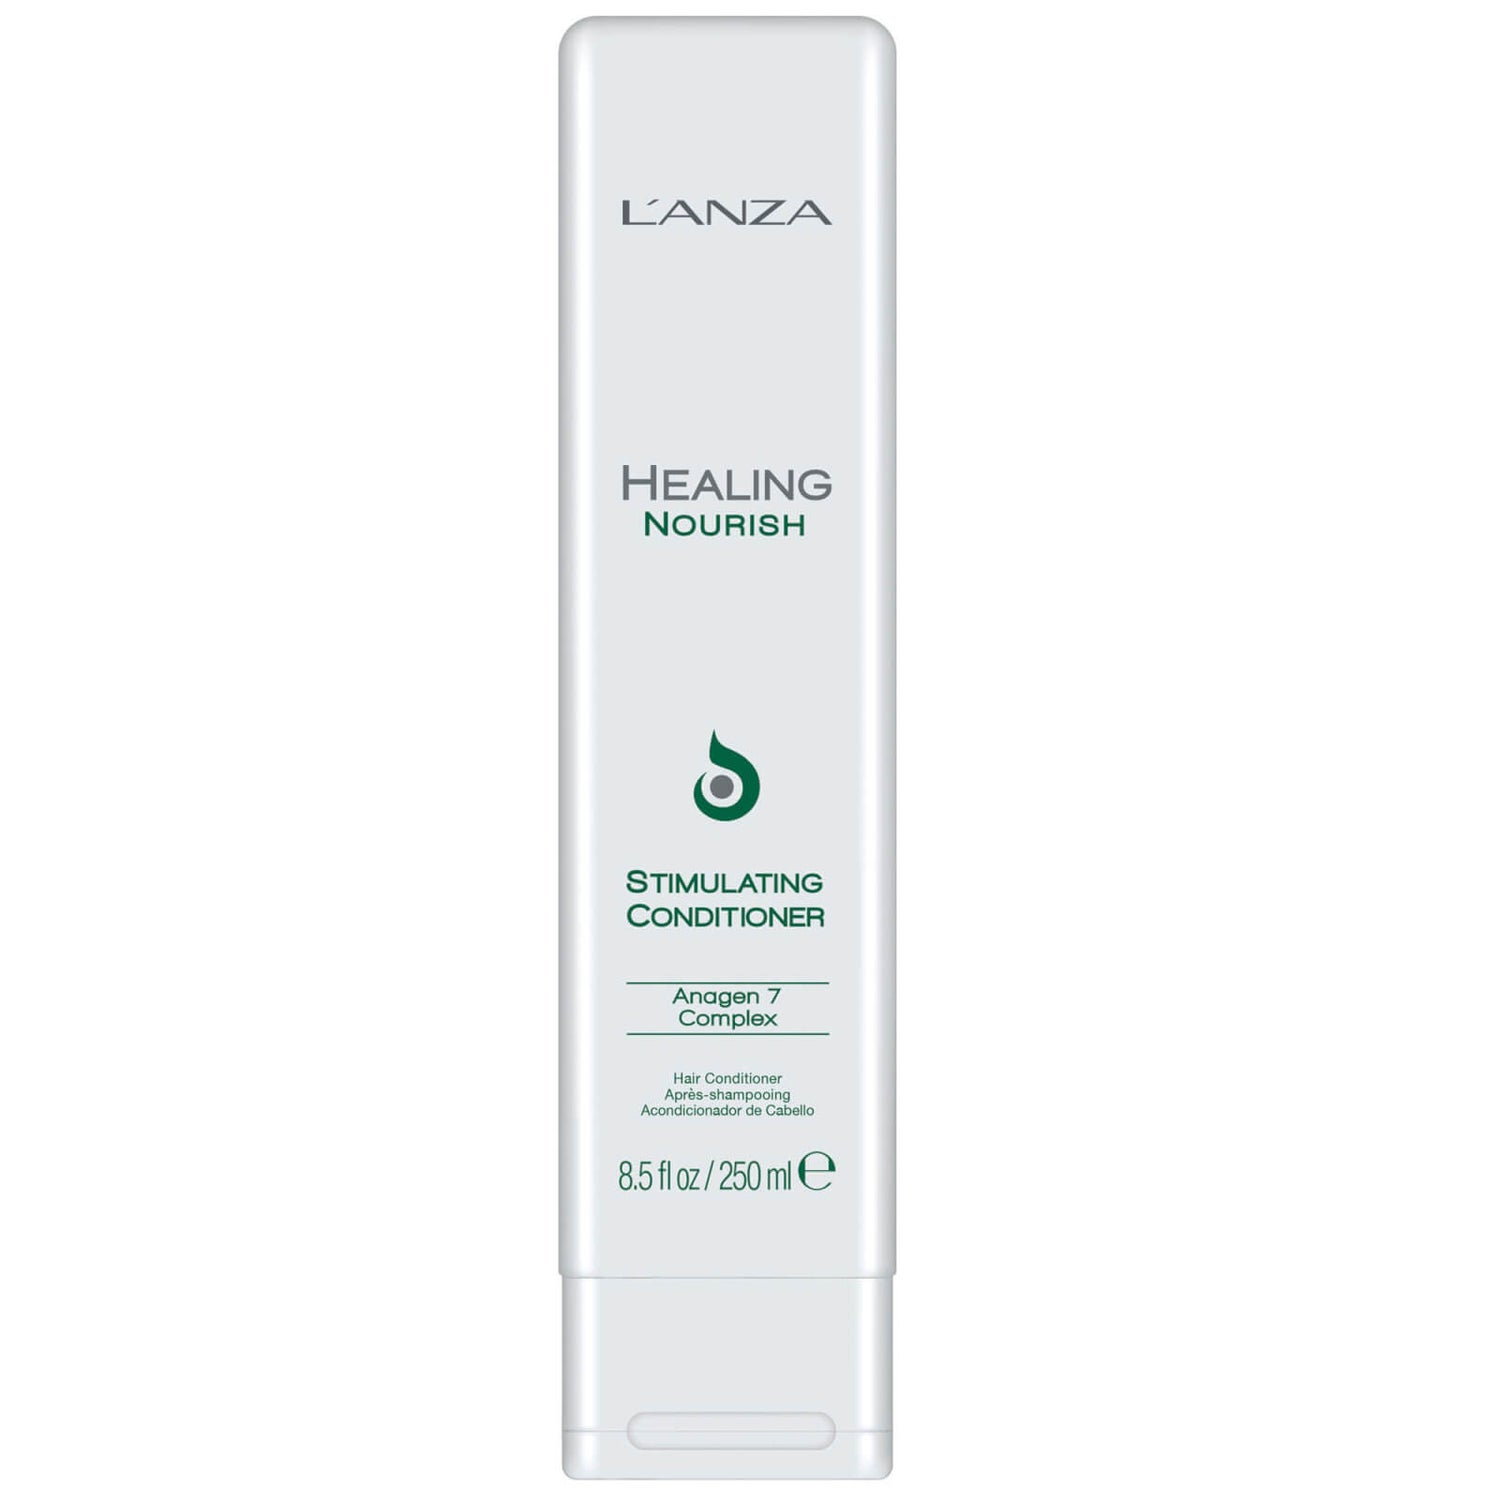 L'Anza Healing Nourish Stimulating Conditioner (250 ml)